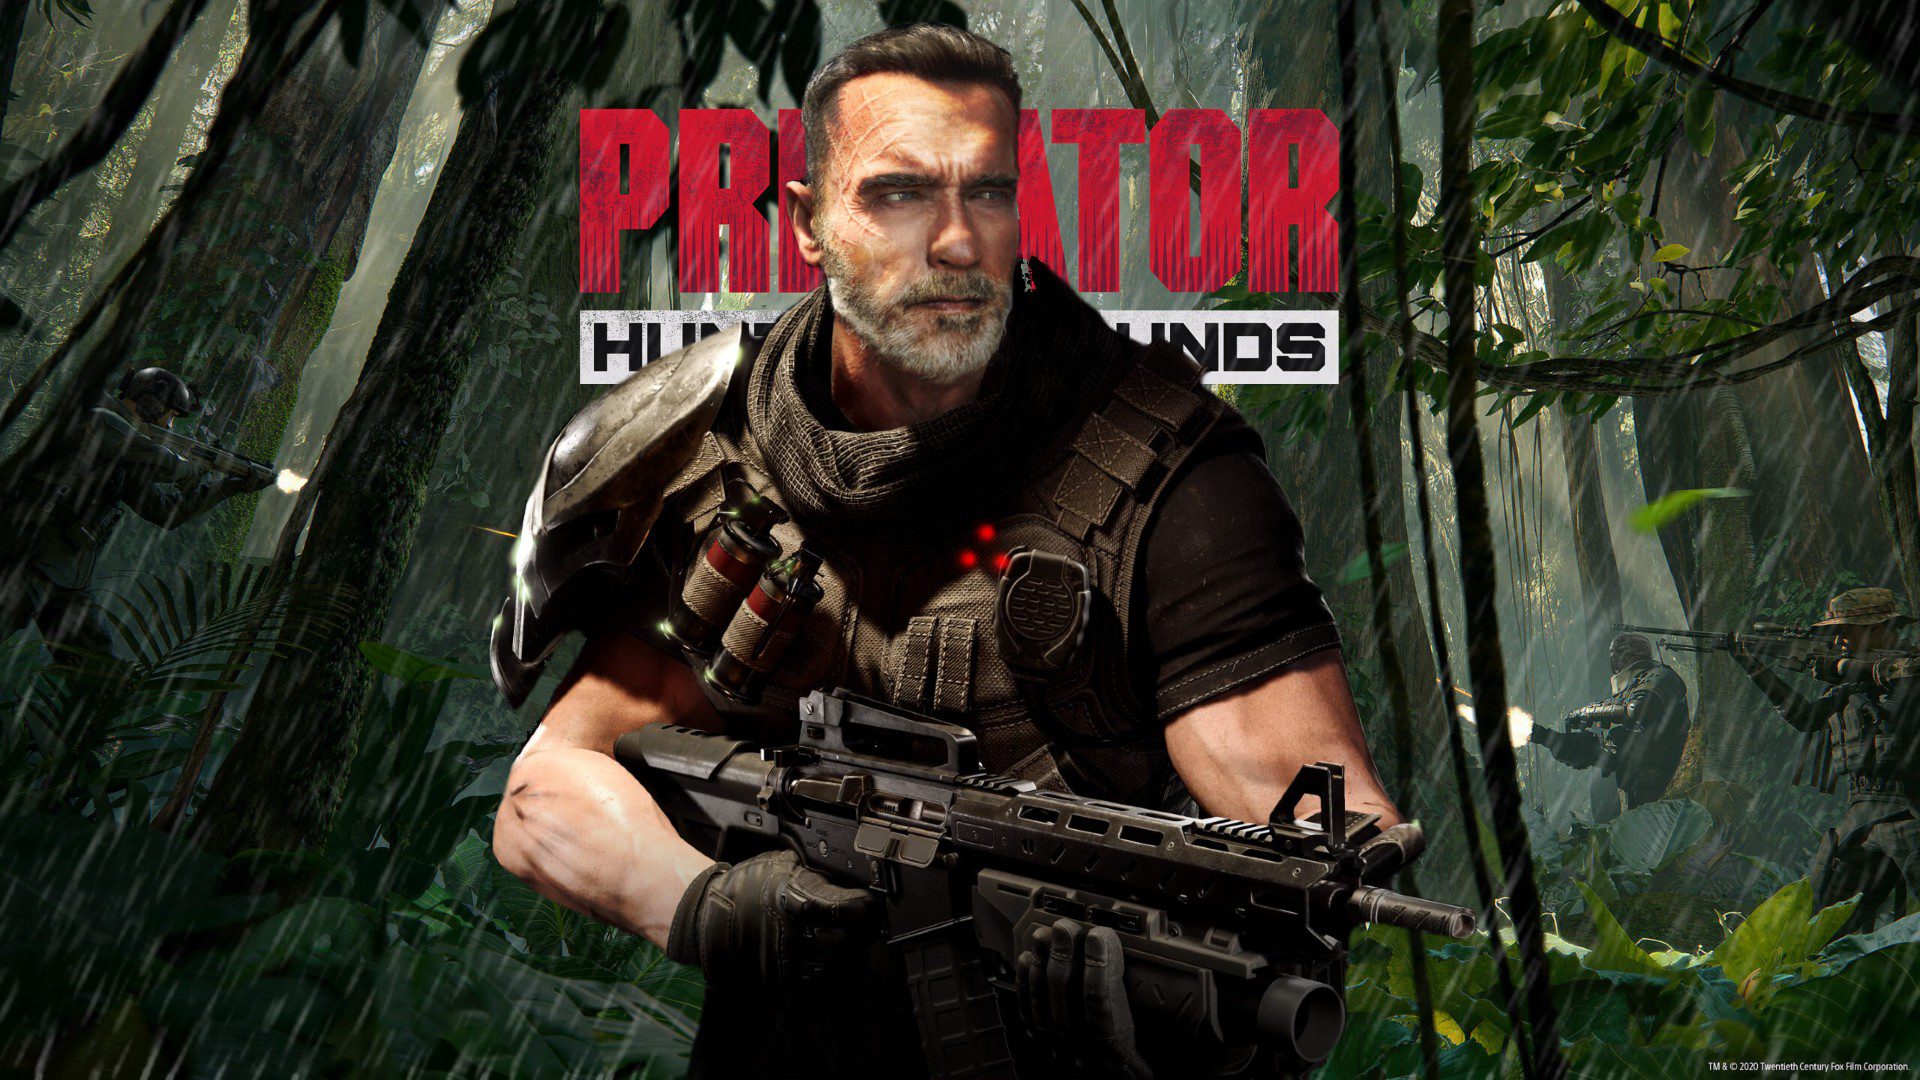 Predator: Hunting Grounds DLC